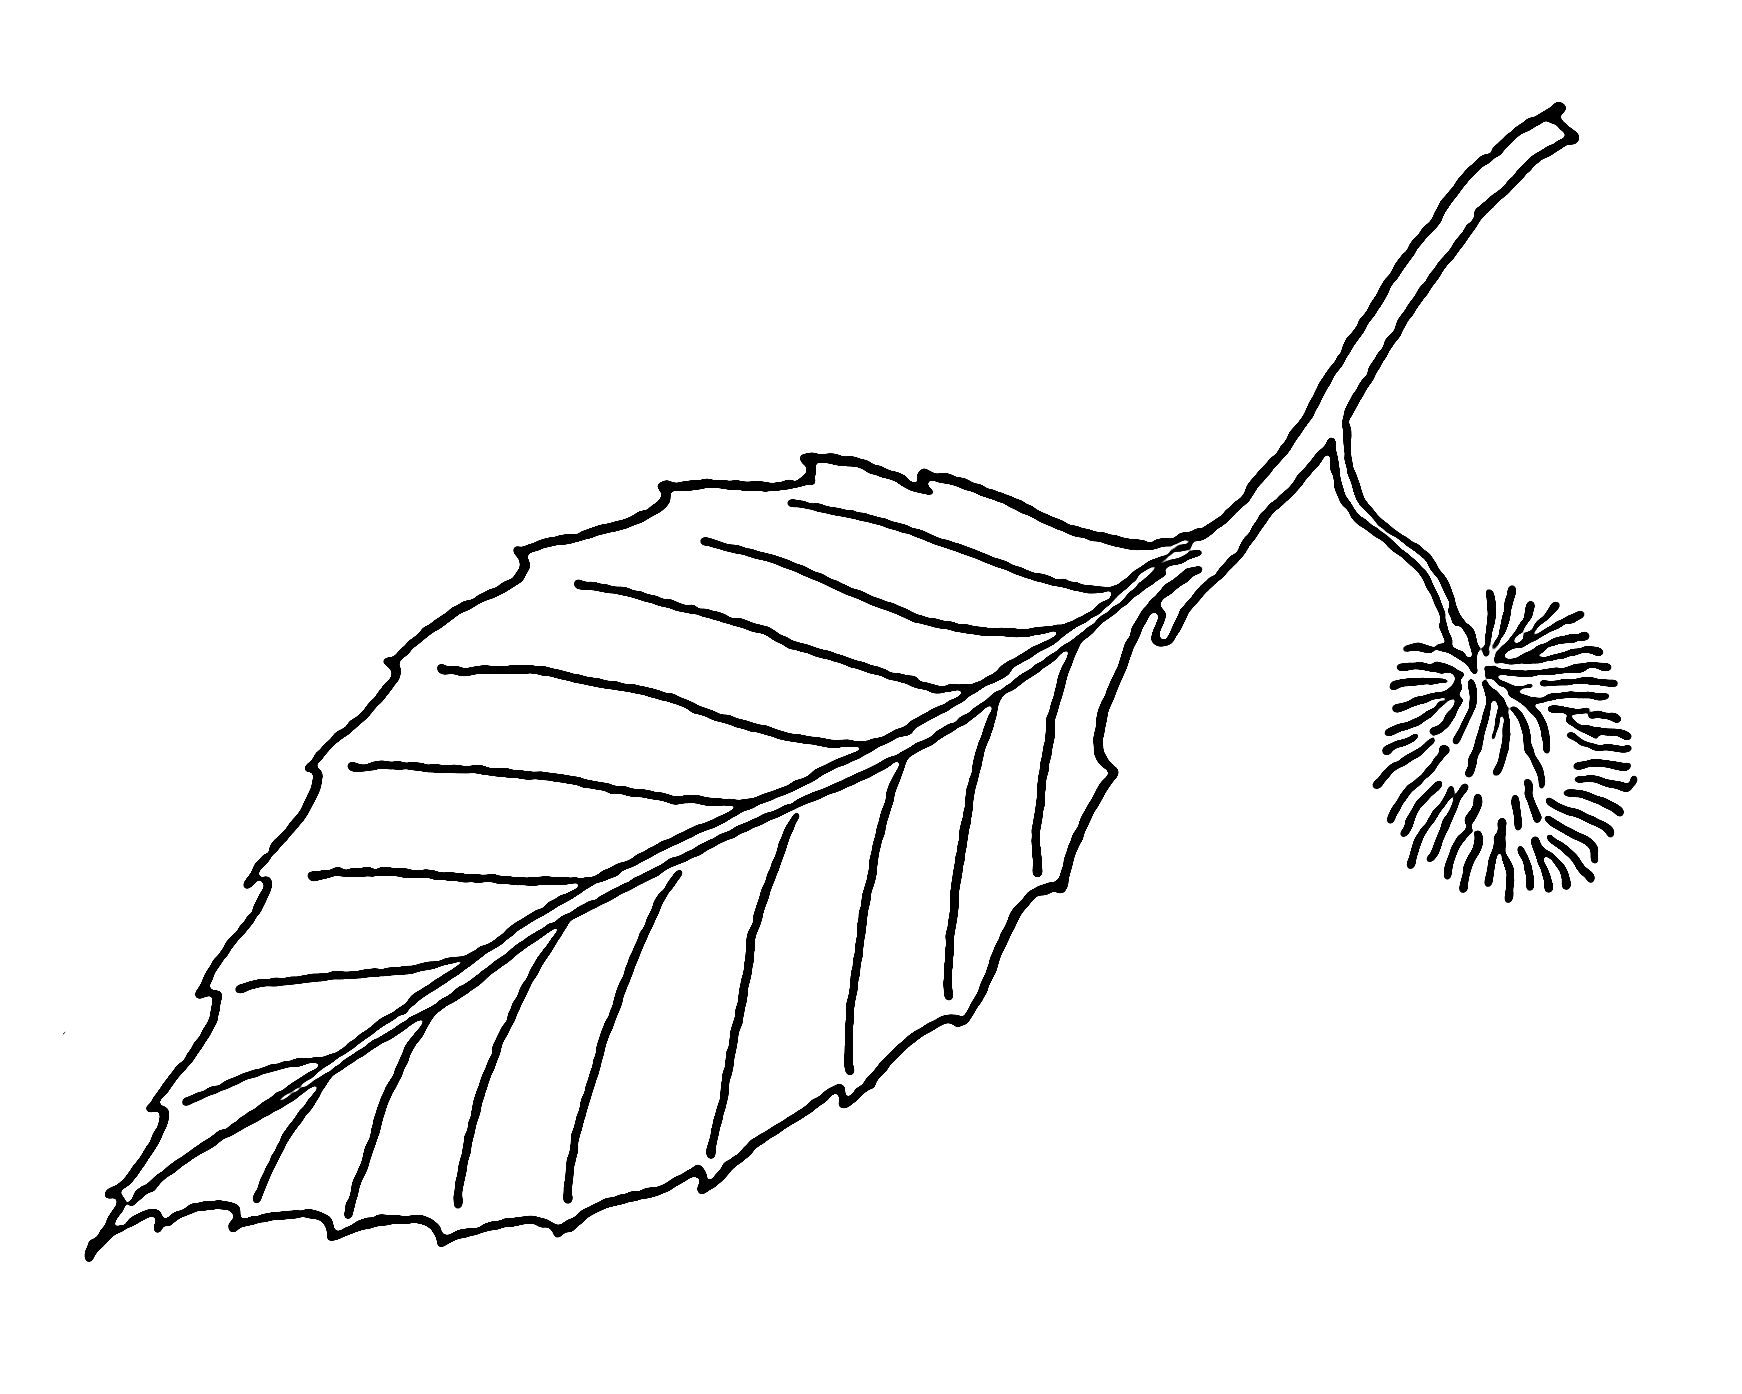 Leaf Line Drawing